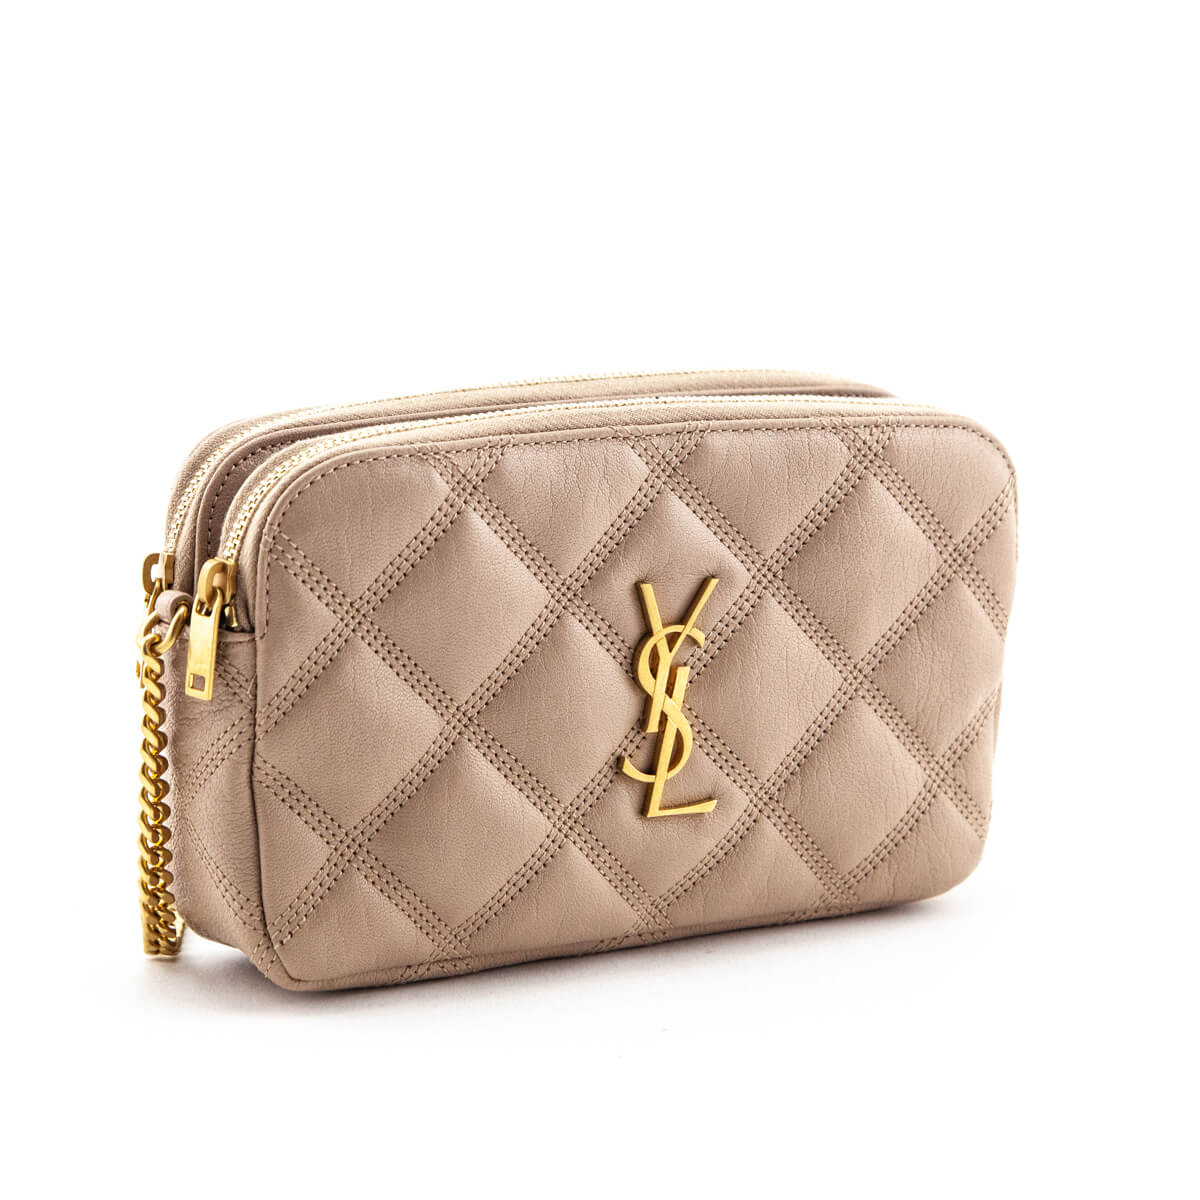 YSL BECKY Handbag Authentic